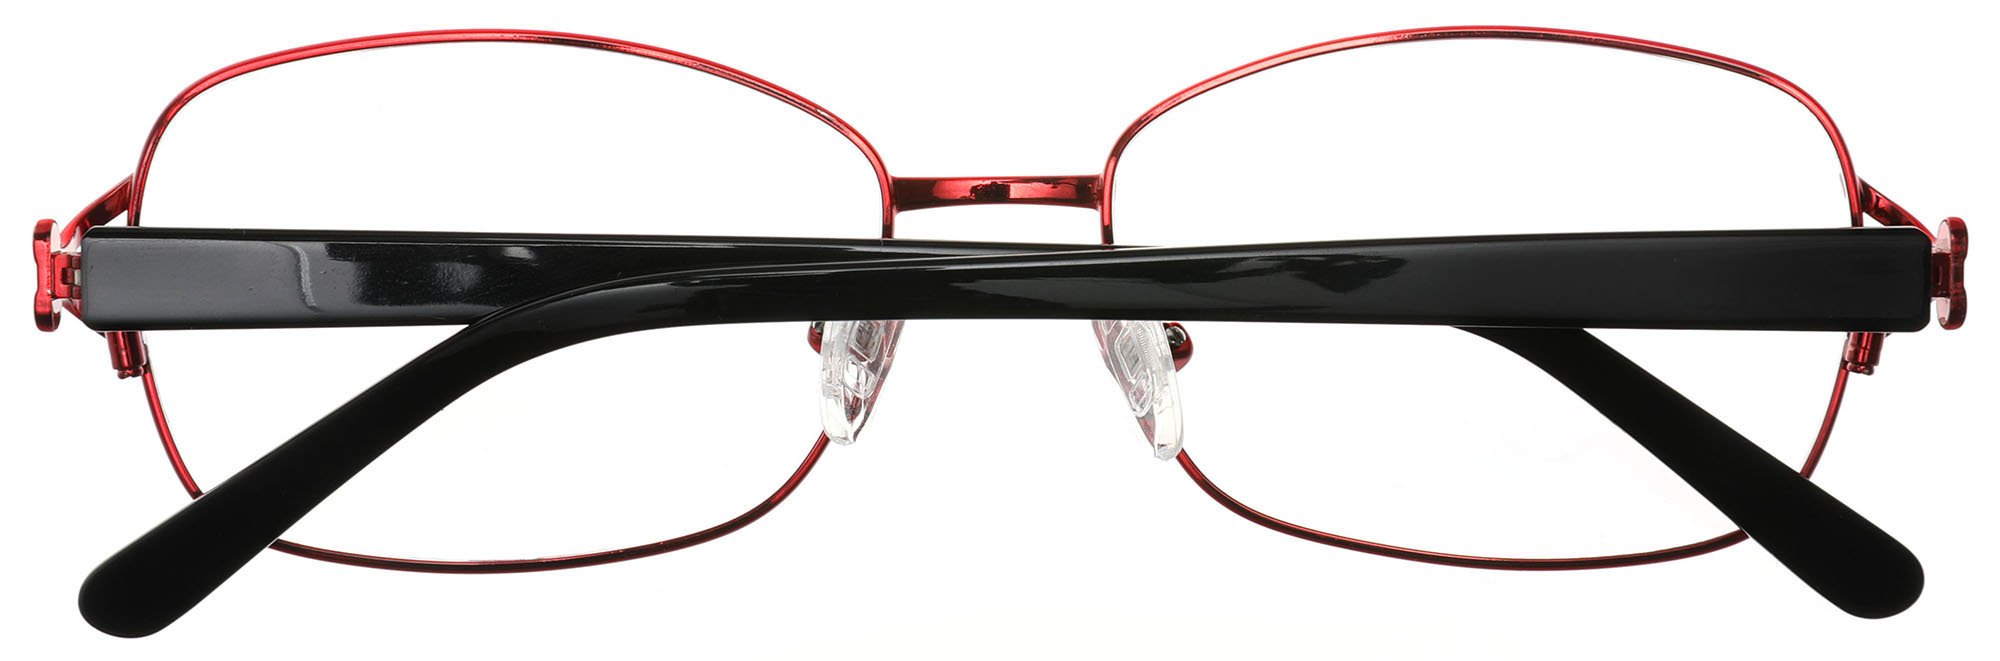 Tango Optics Metal Optical Eyeglasses Frame Luxe Stainless Steel Virginia Apgar Red Gold For Prescription Lens-Samba Shades